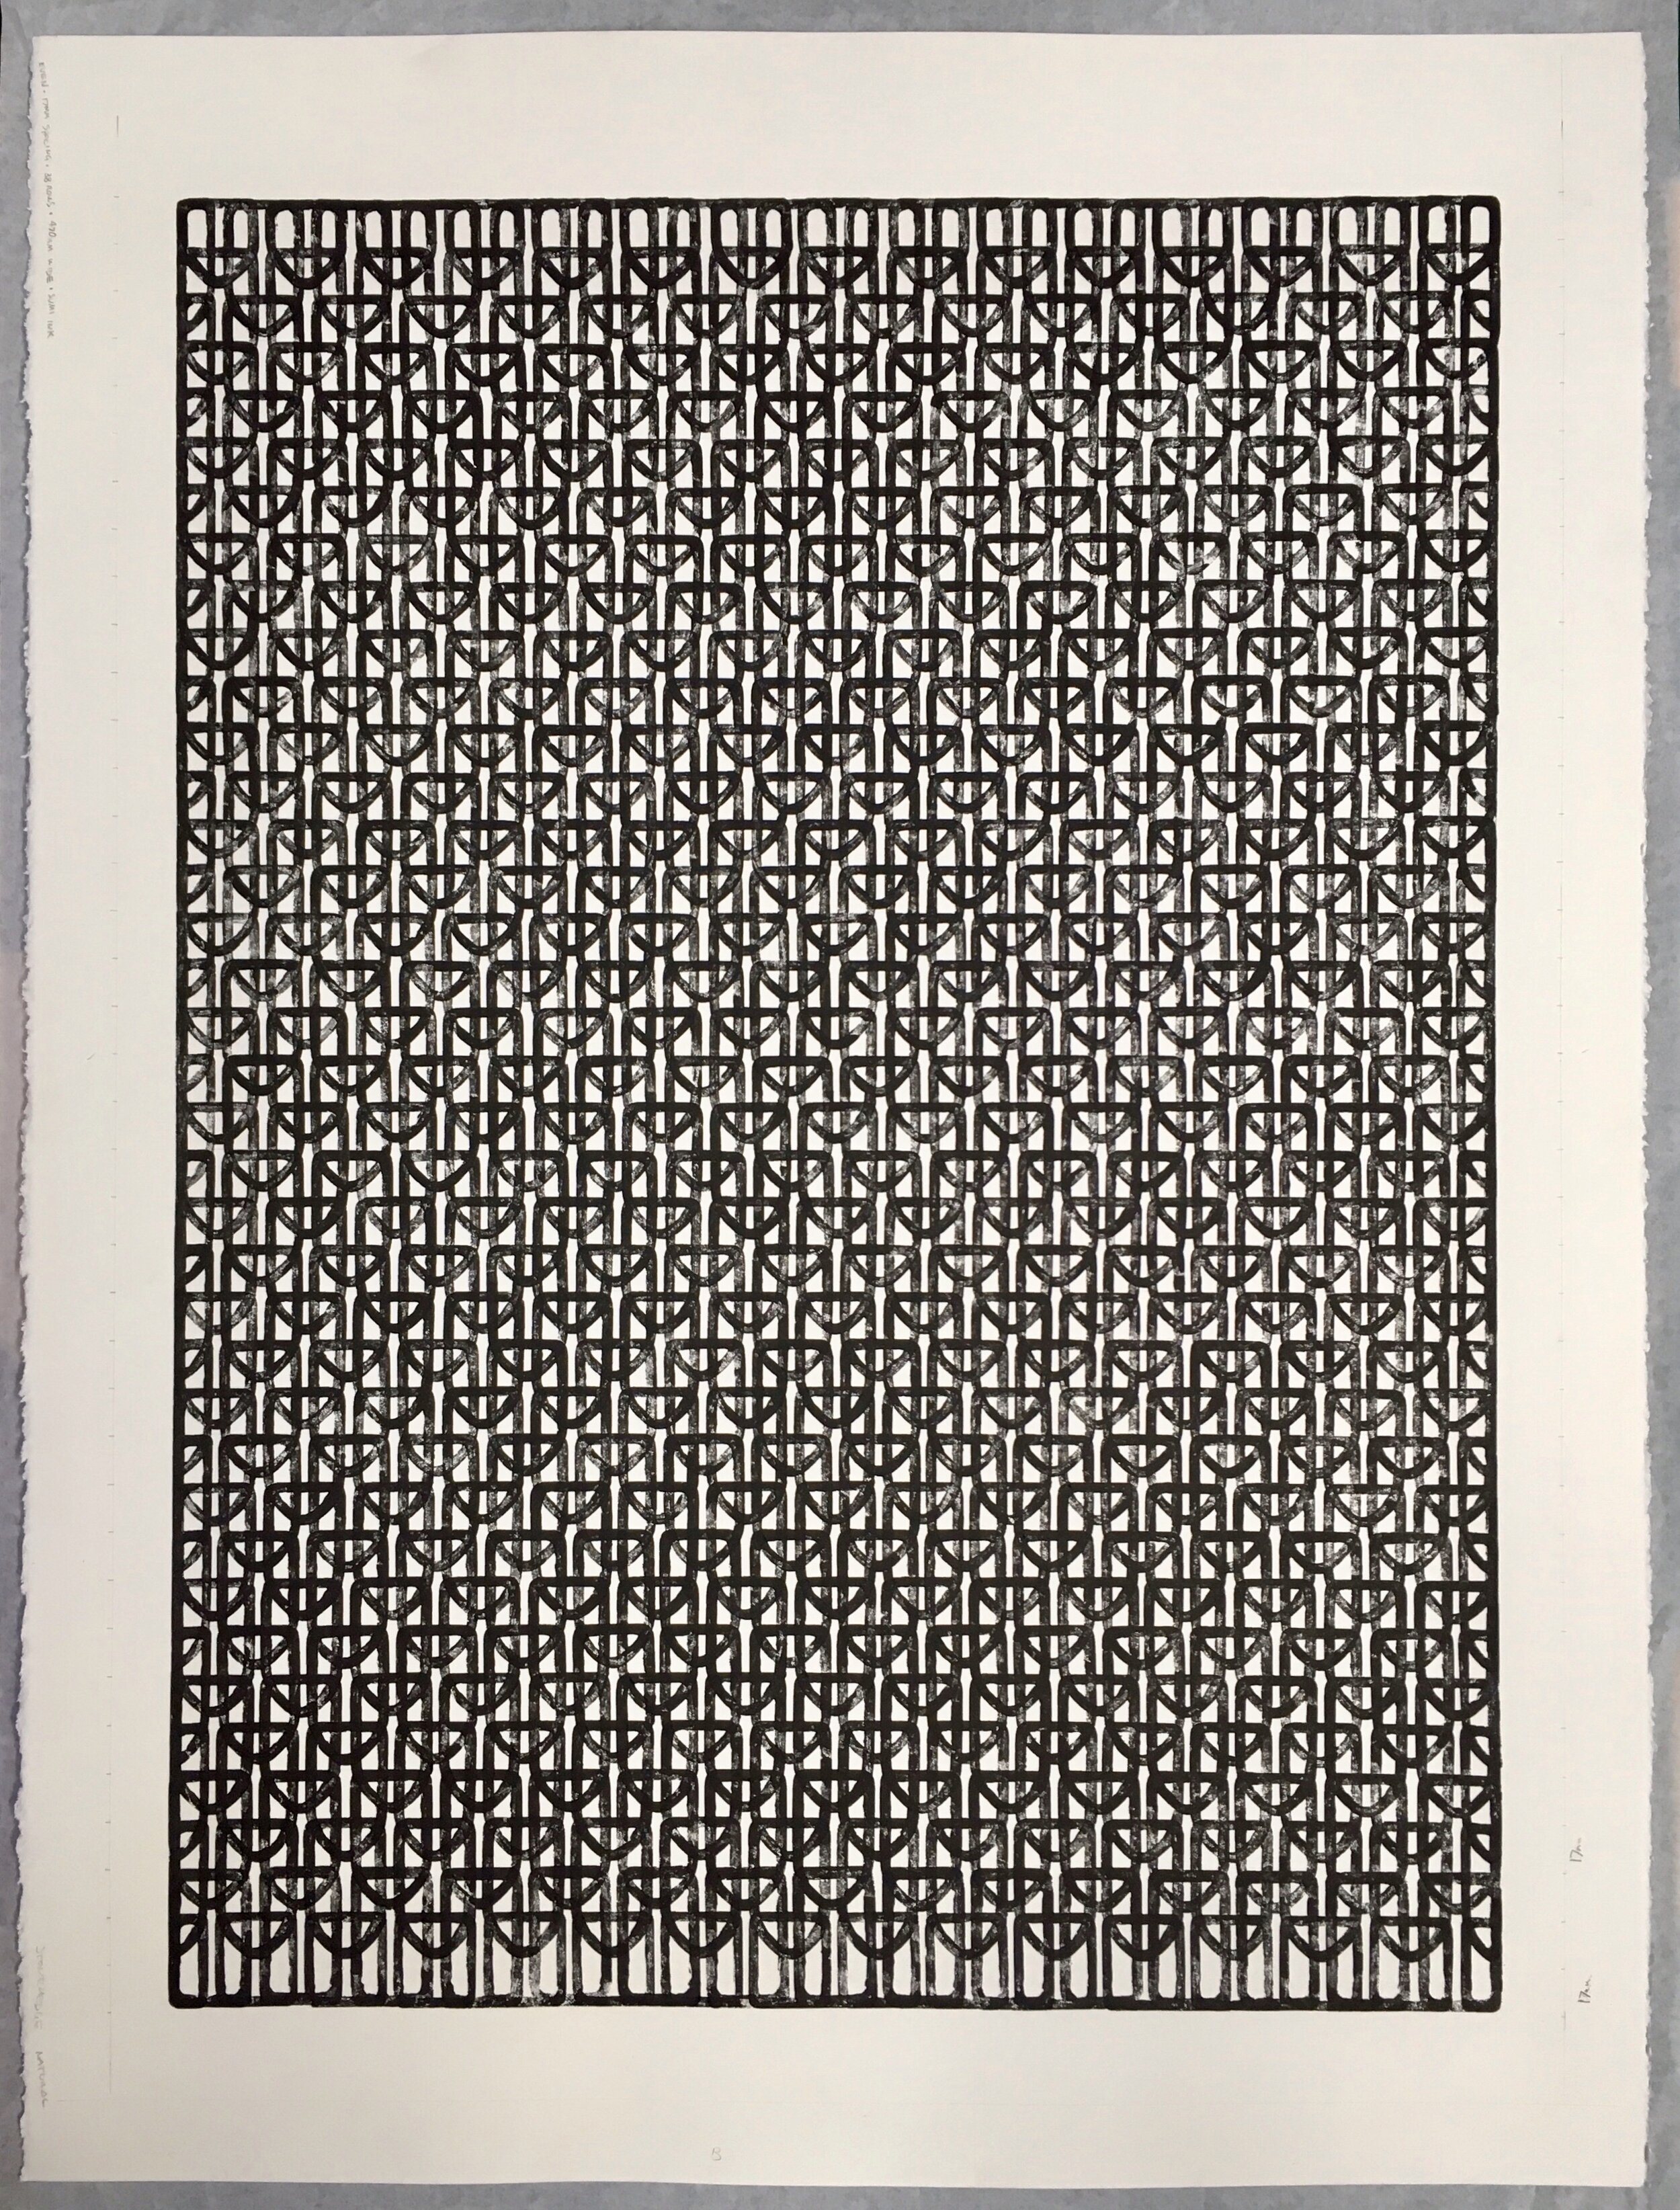  Benjamin Gallagher  24 Trigg's Lane  2020 Soot and graphite on paper Artwork H64.5cm x W47cm Paper H76cm x W56.5 